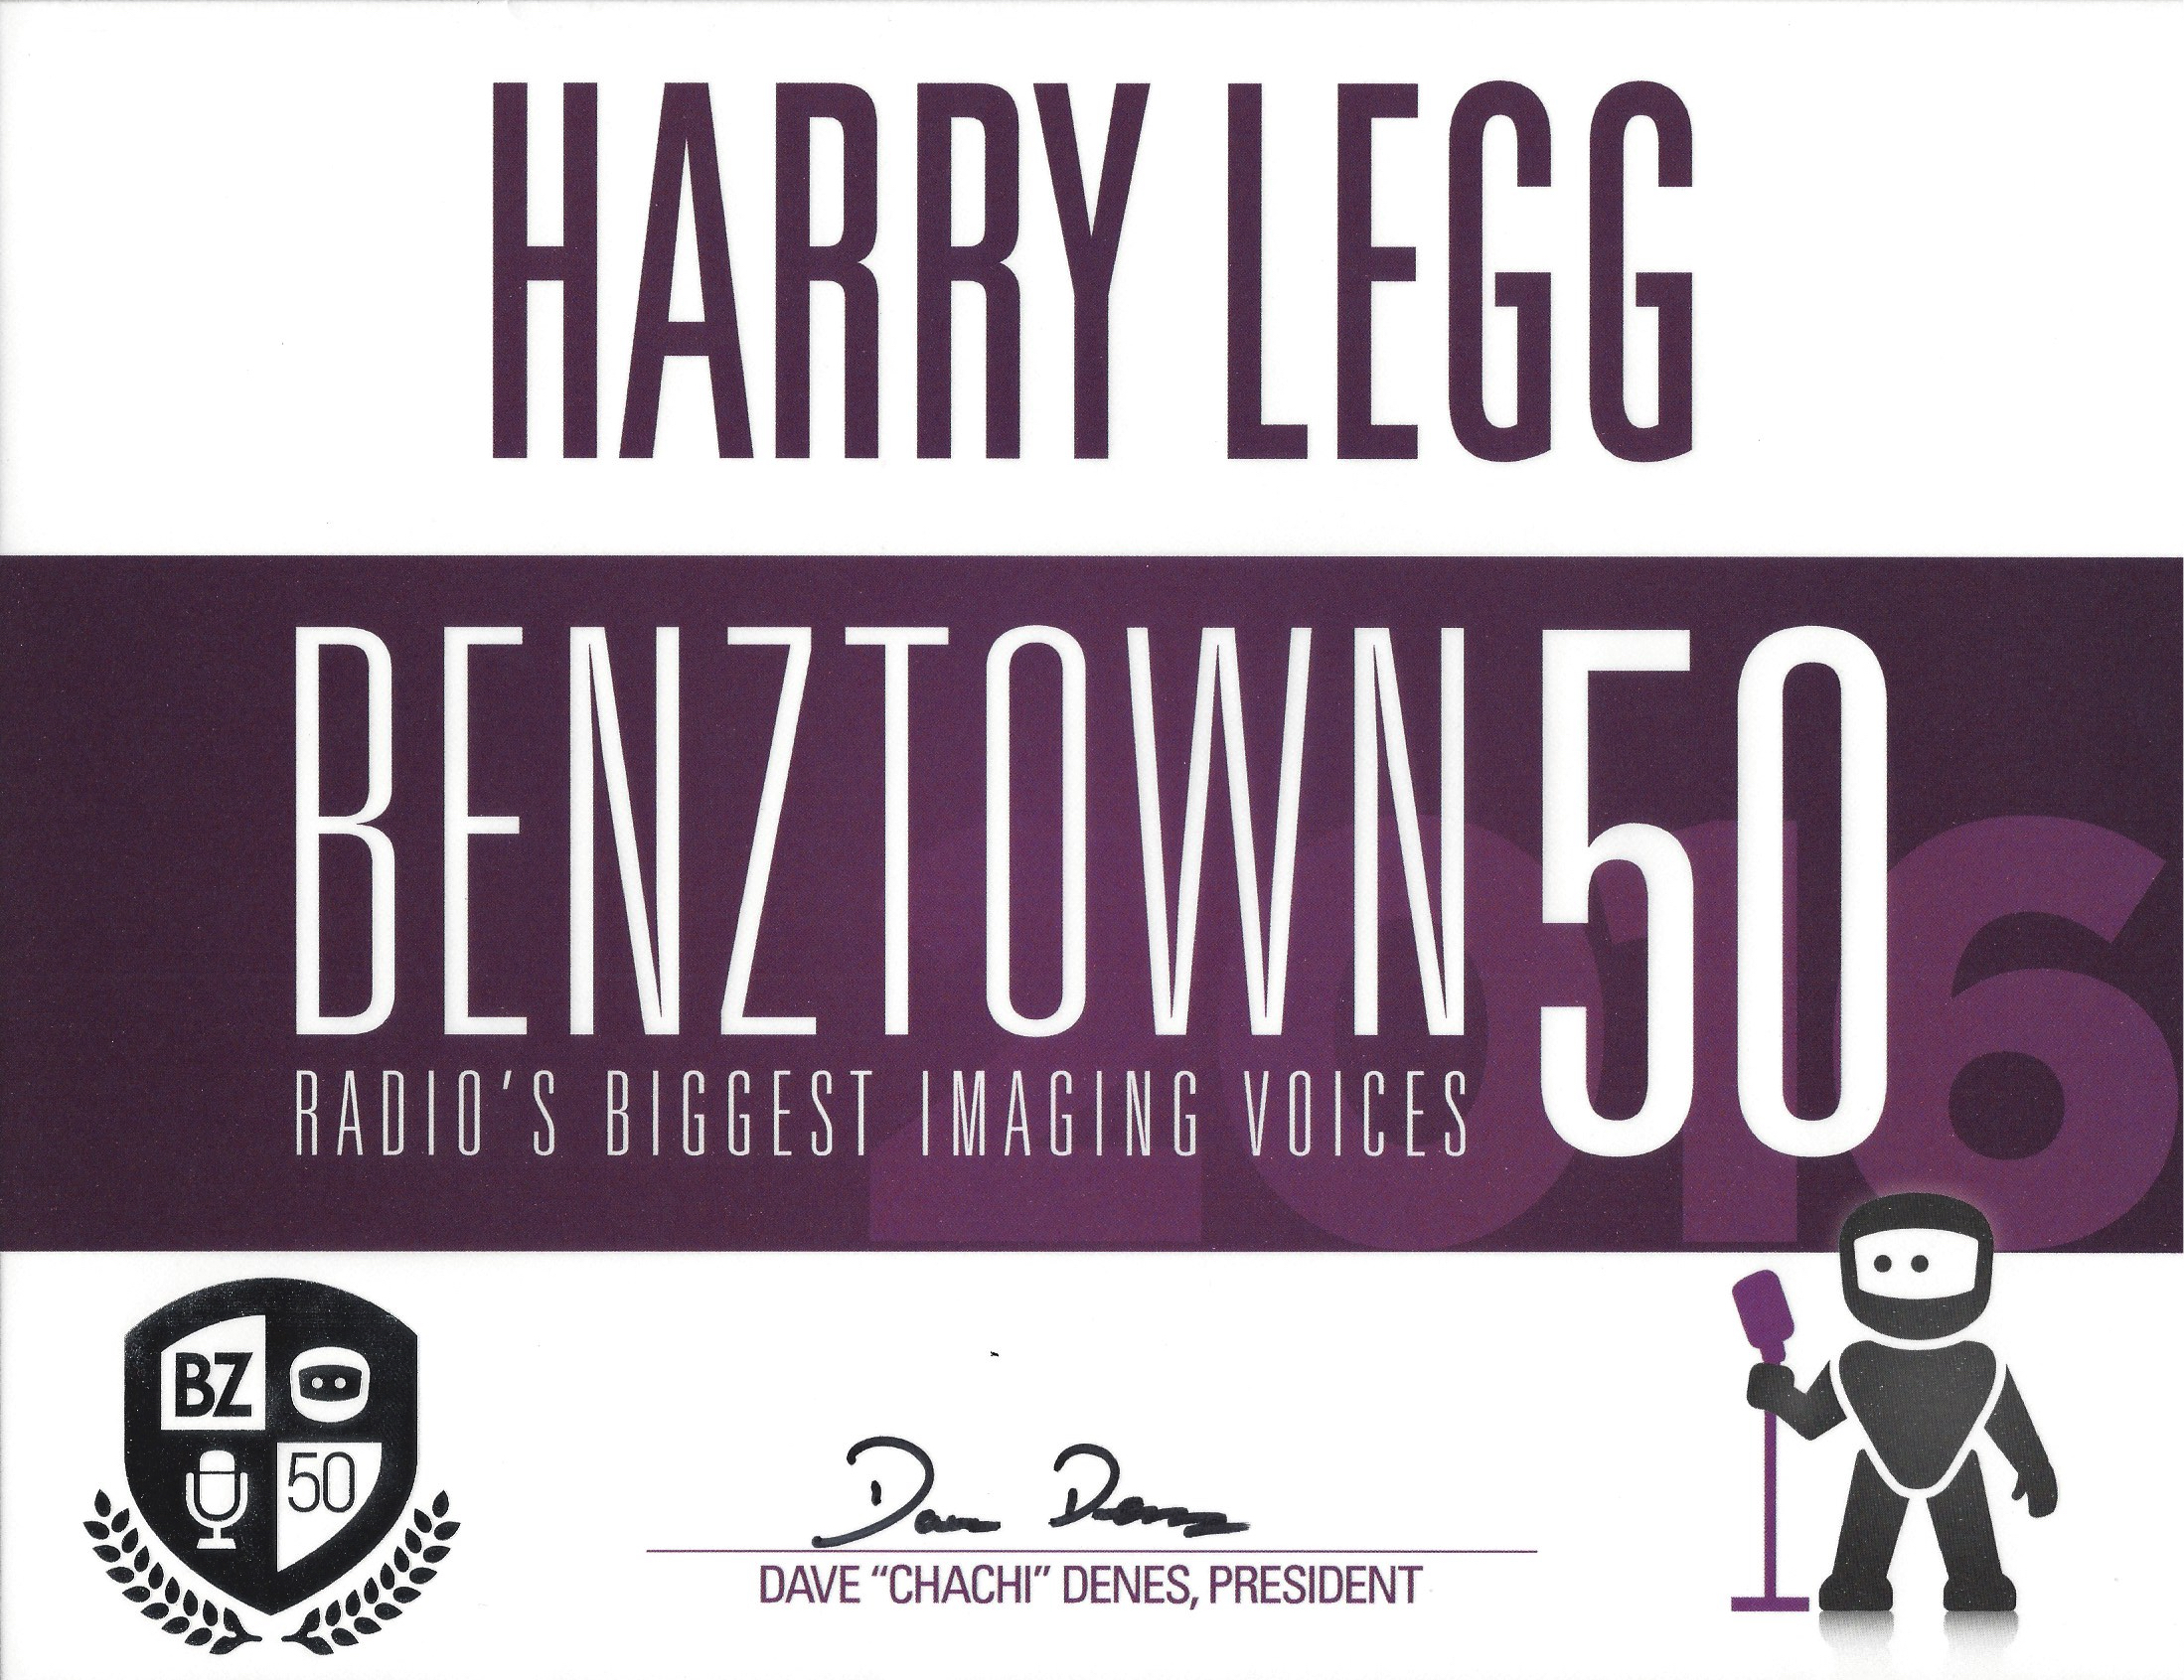 Benztown 50 Logo